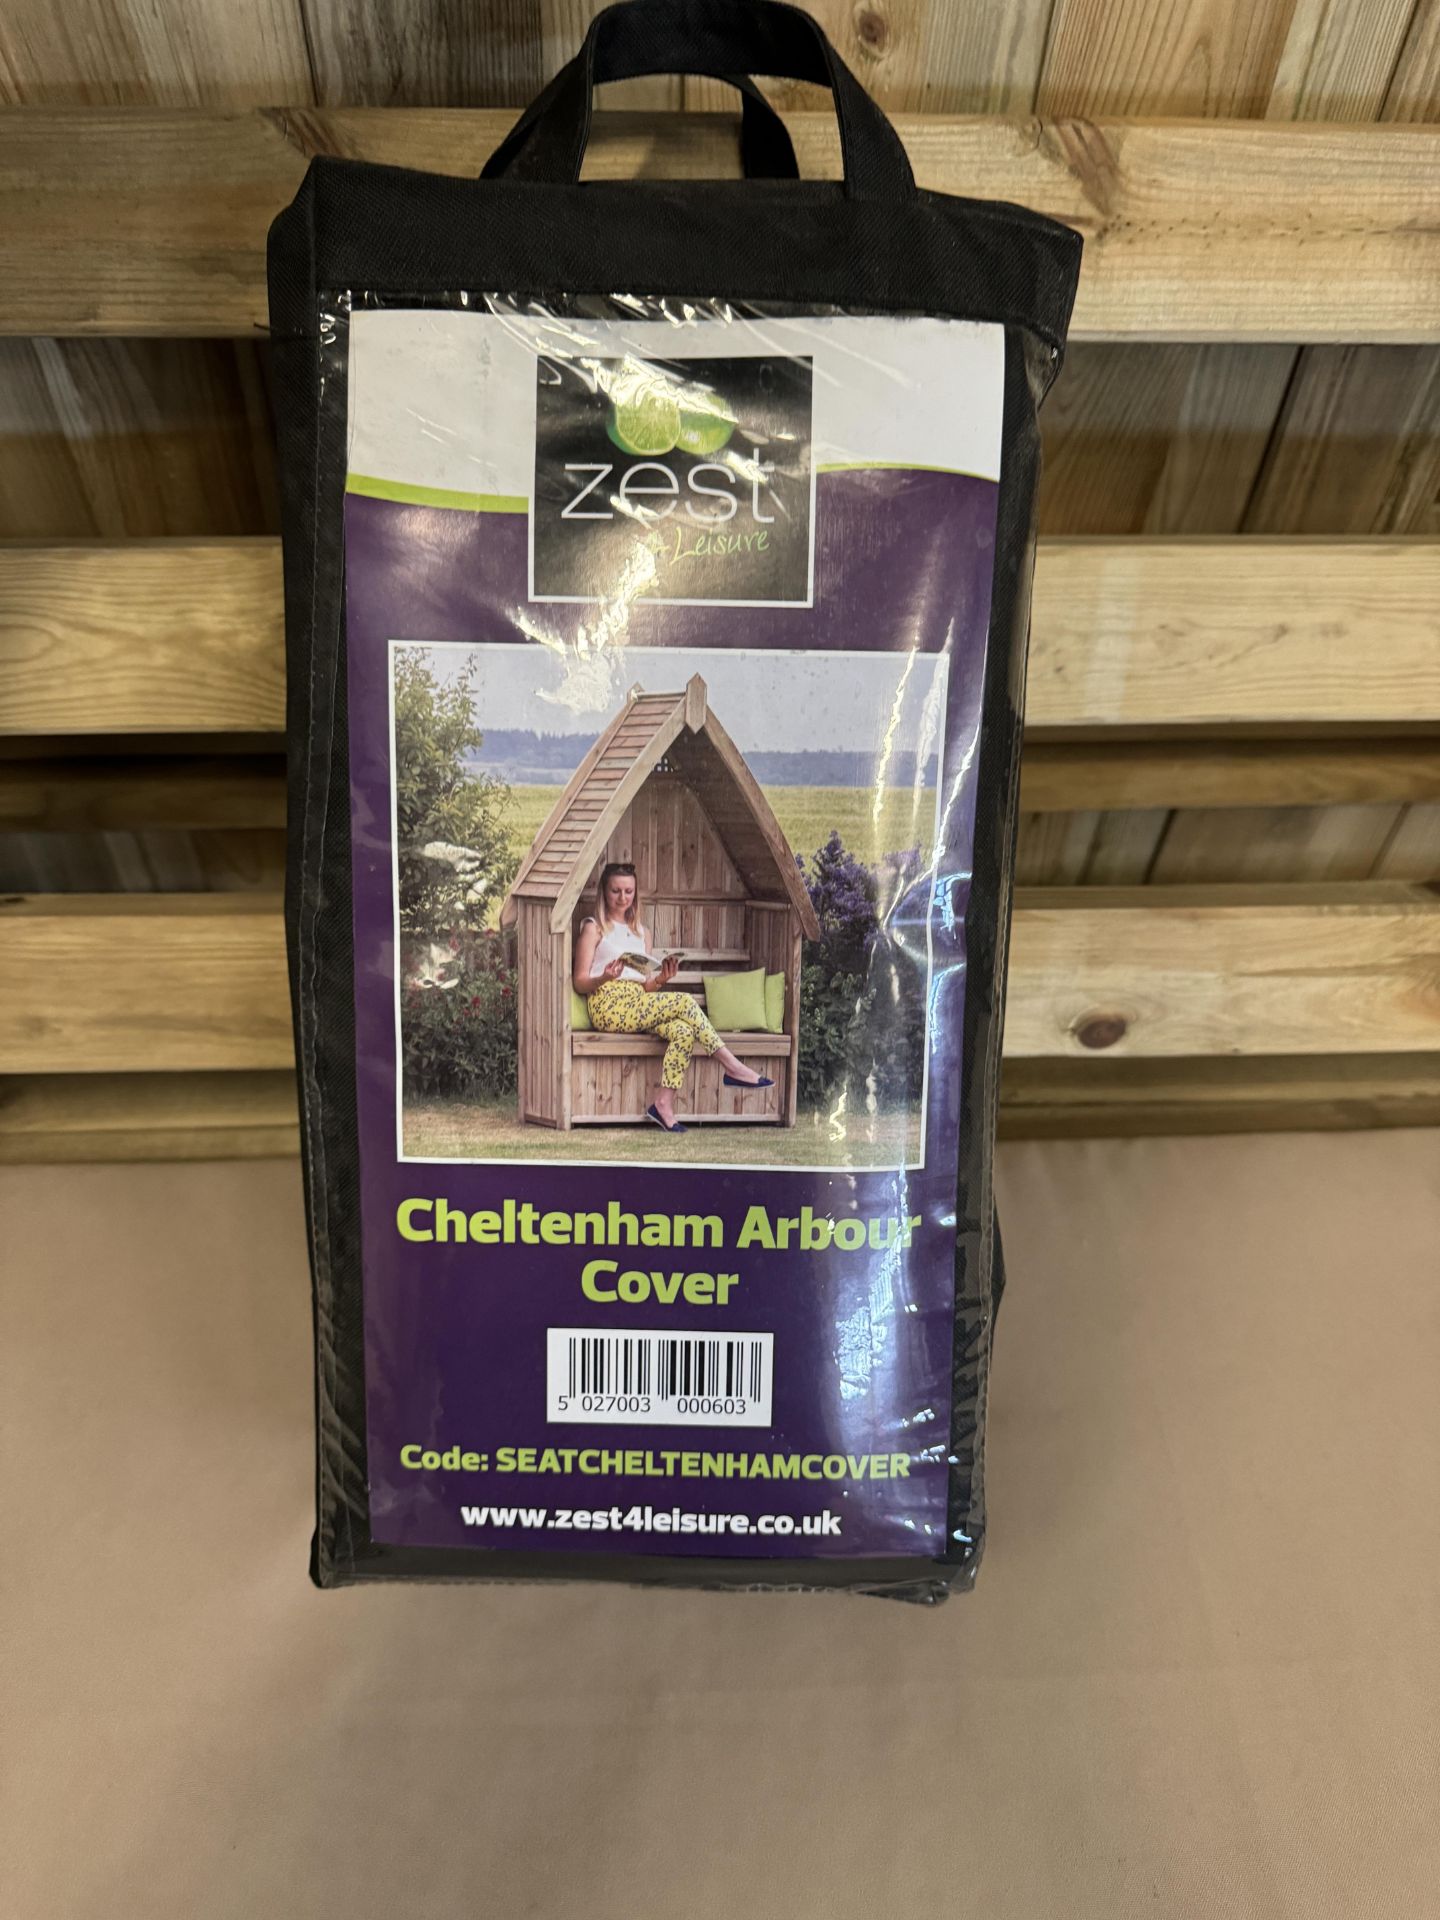 Cheltenham Arbour Cover - New as Packaged